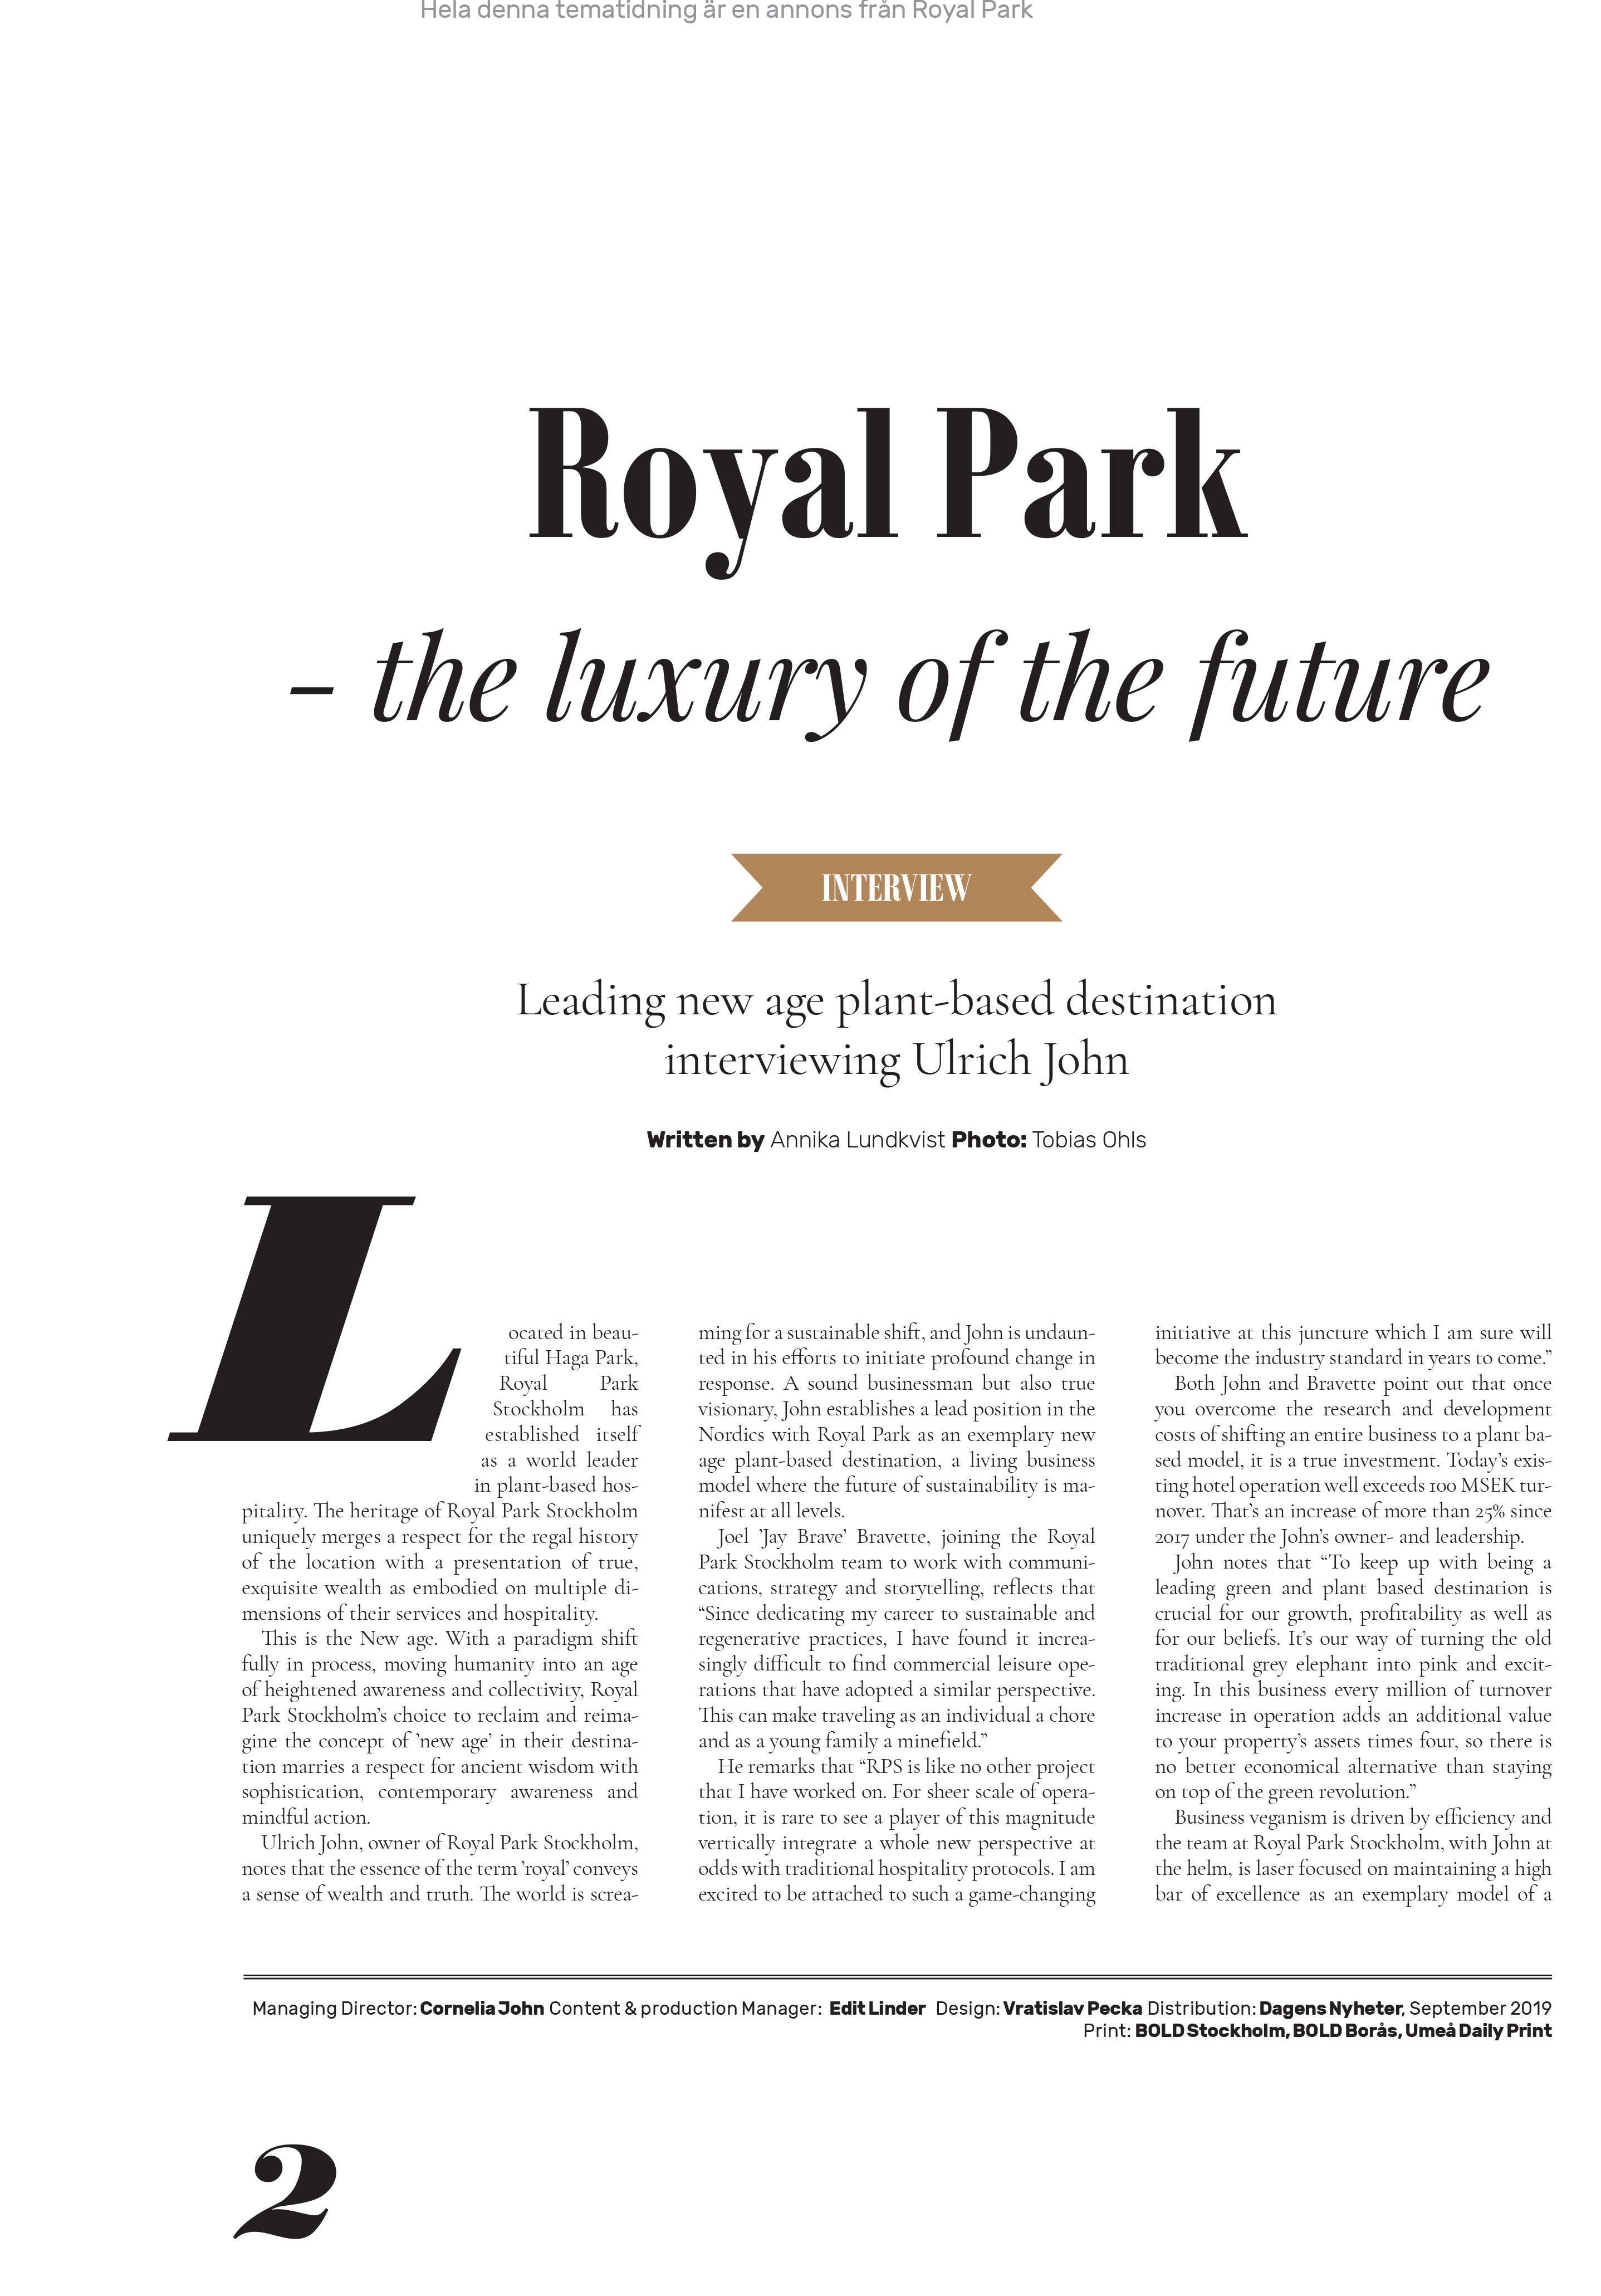 Royal Park Articles in Dagens Nyheter